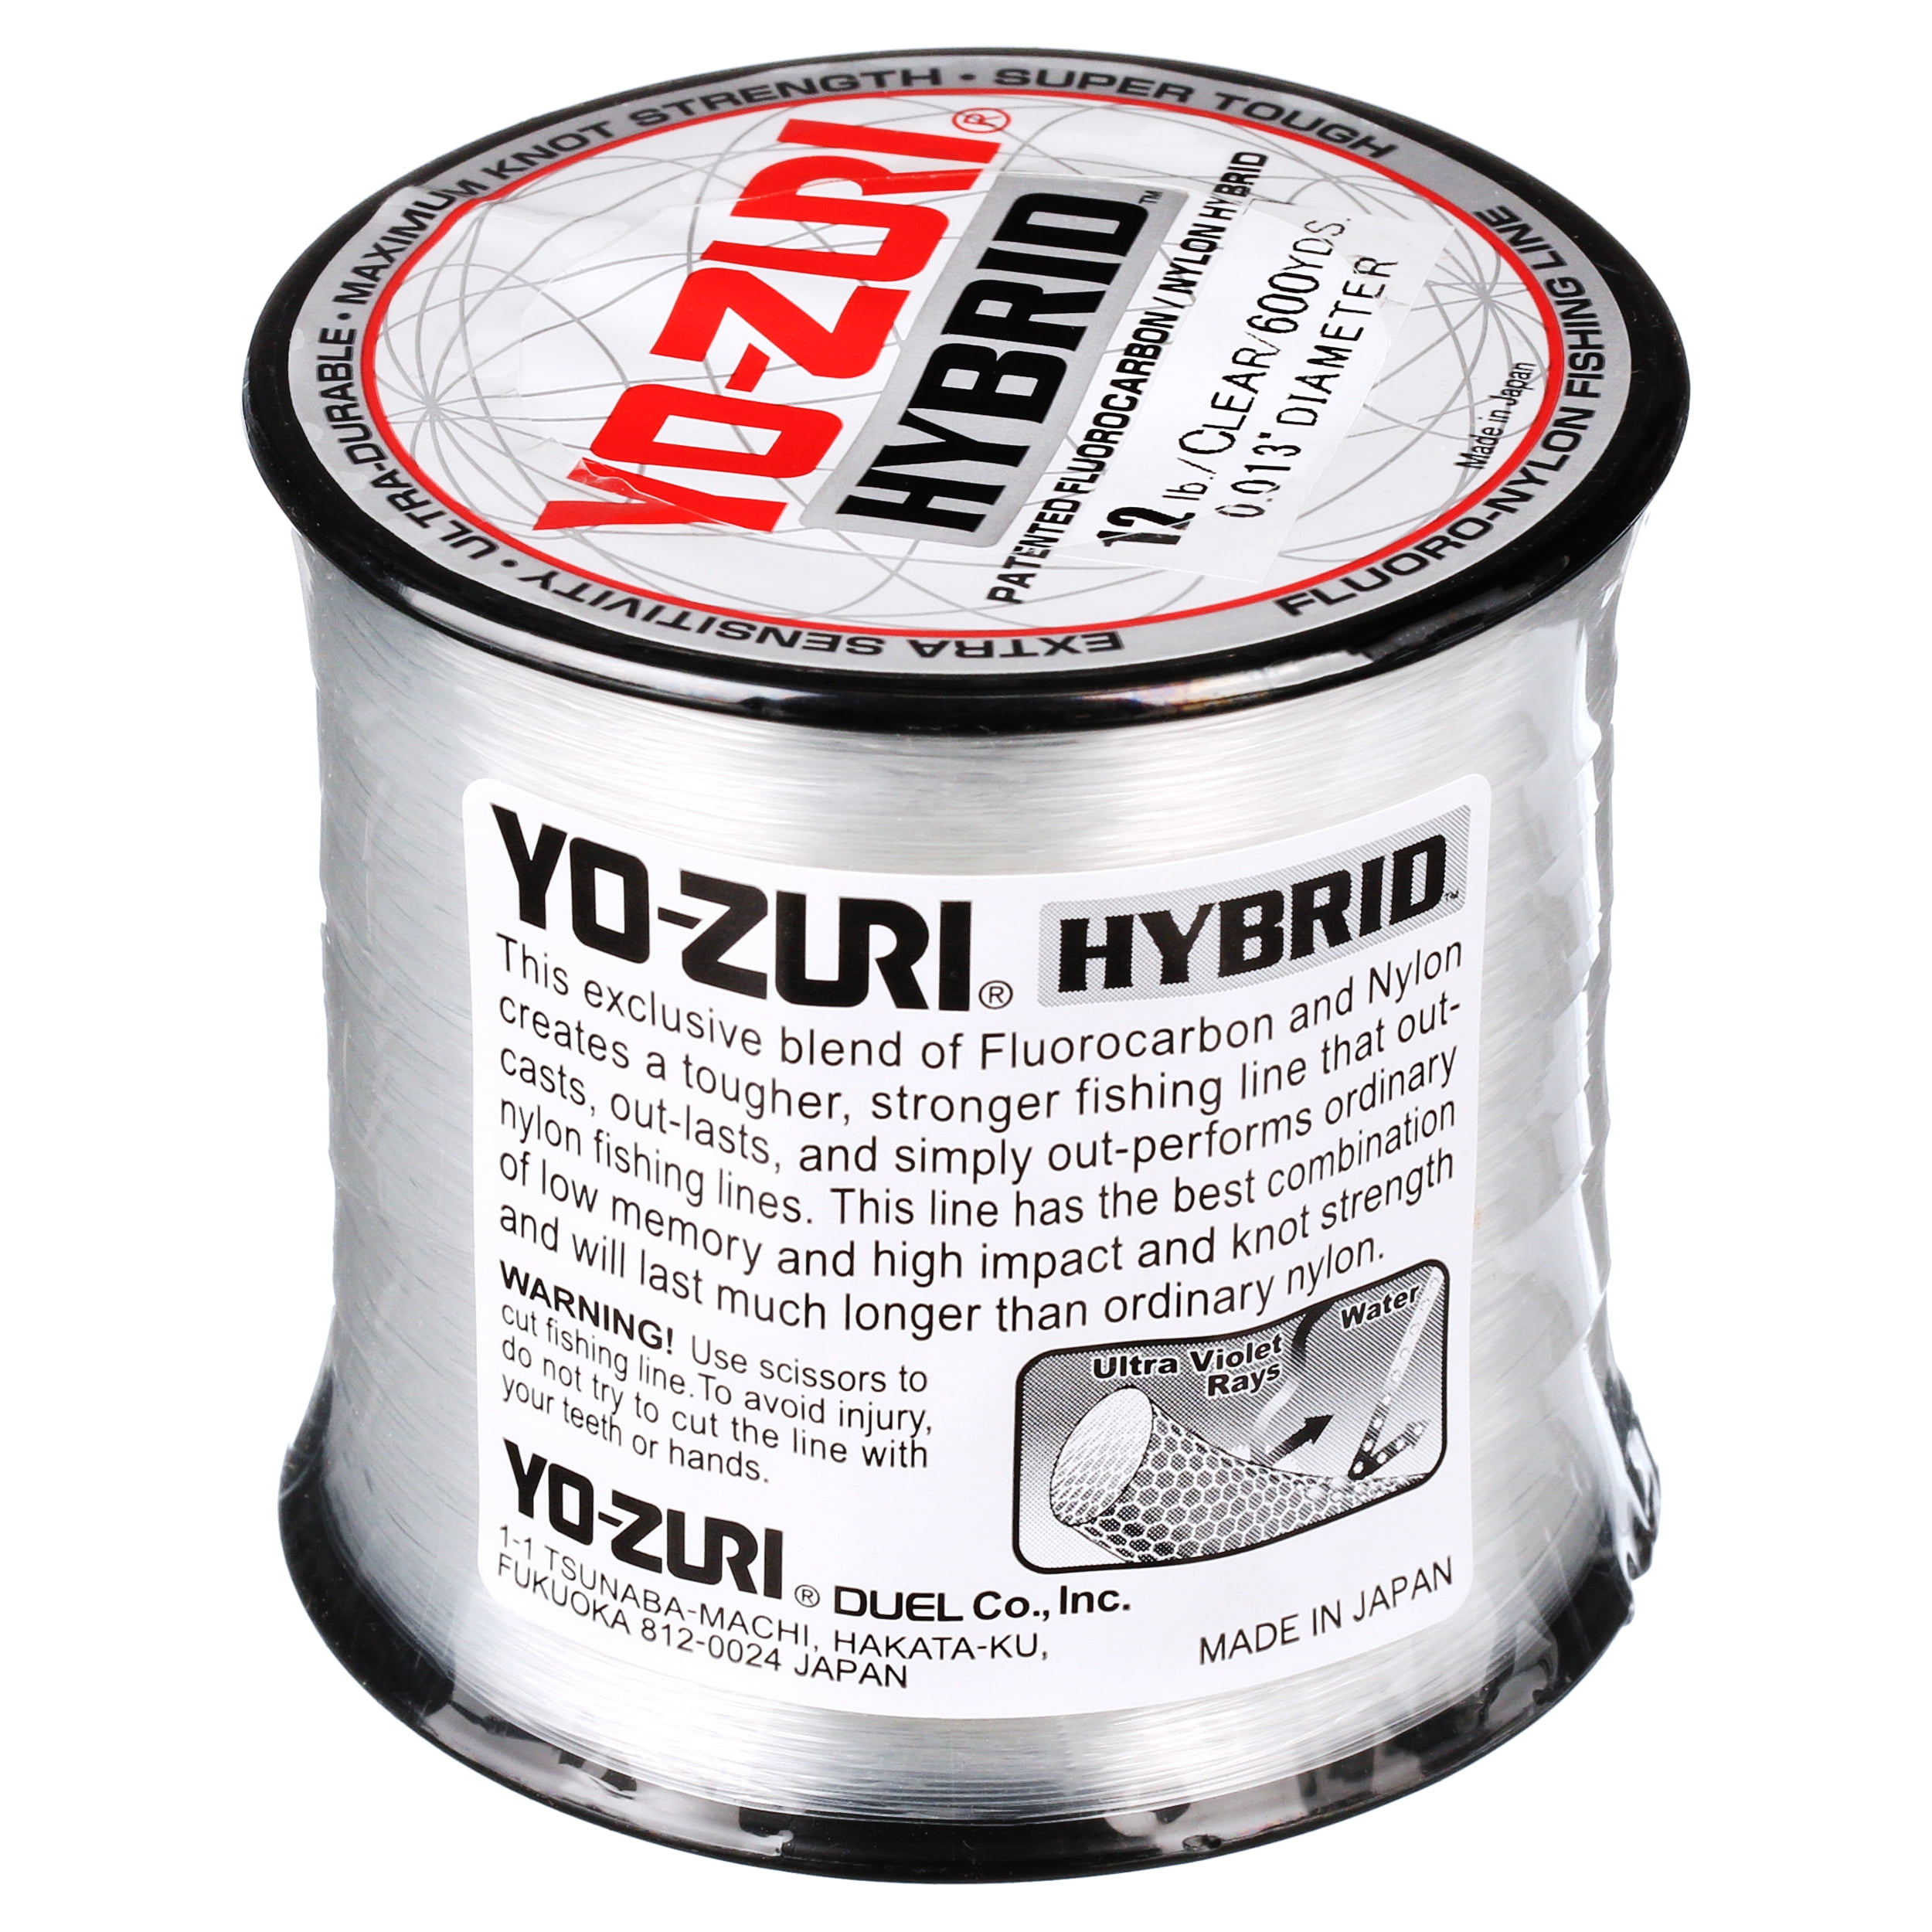 6 PACK YO-ZURI HYBRID Fluorocarbon Fishing Line 6lb/600yd CLEAR COLOR NEW!